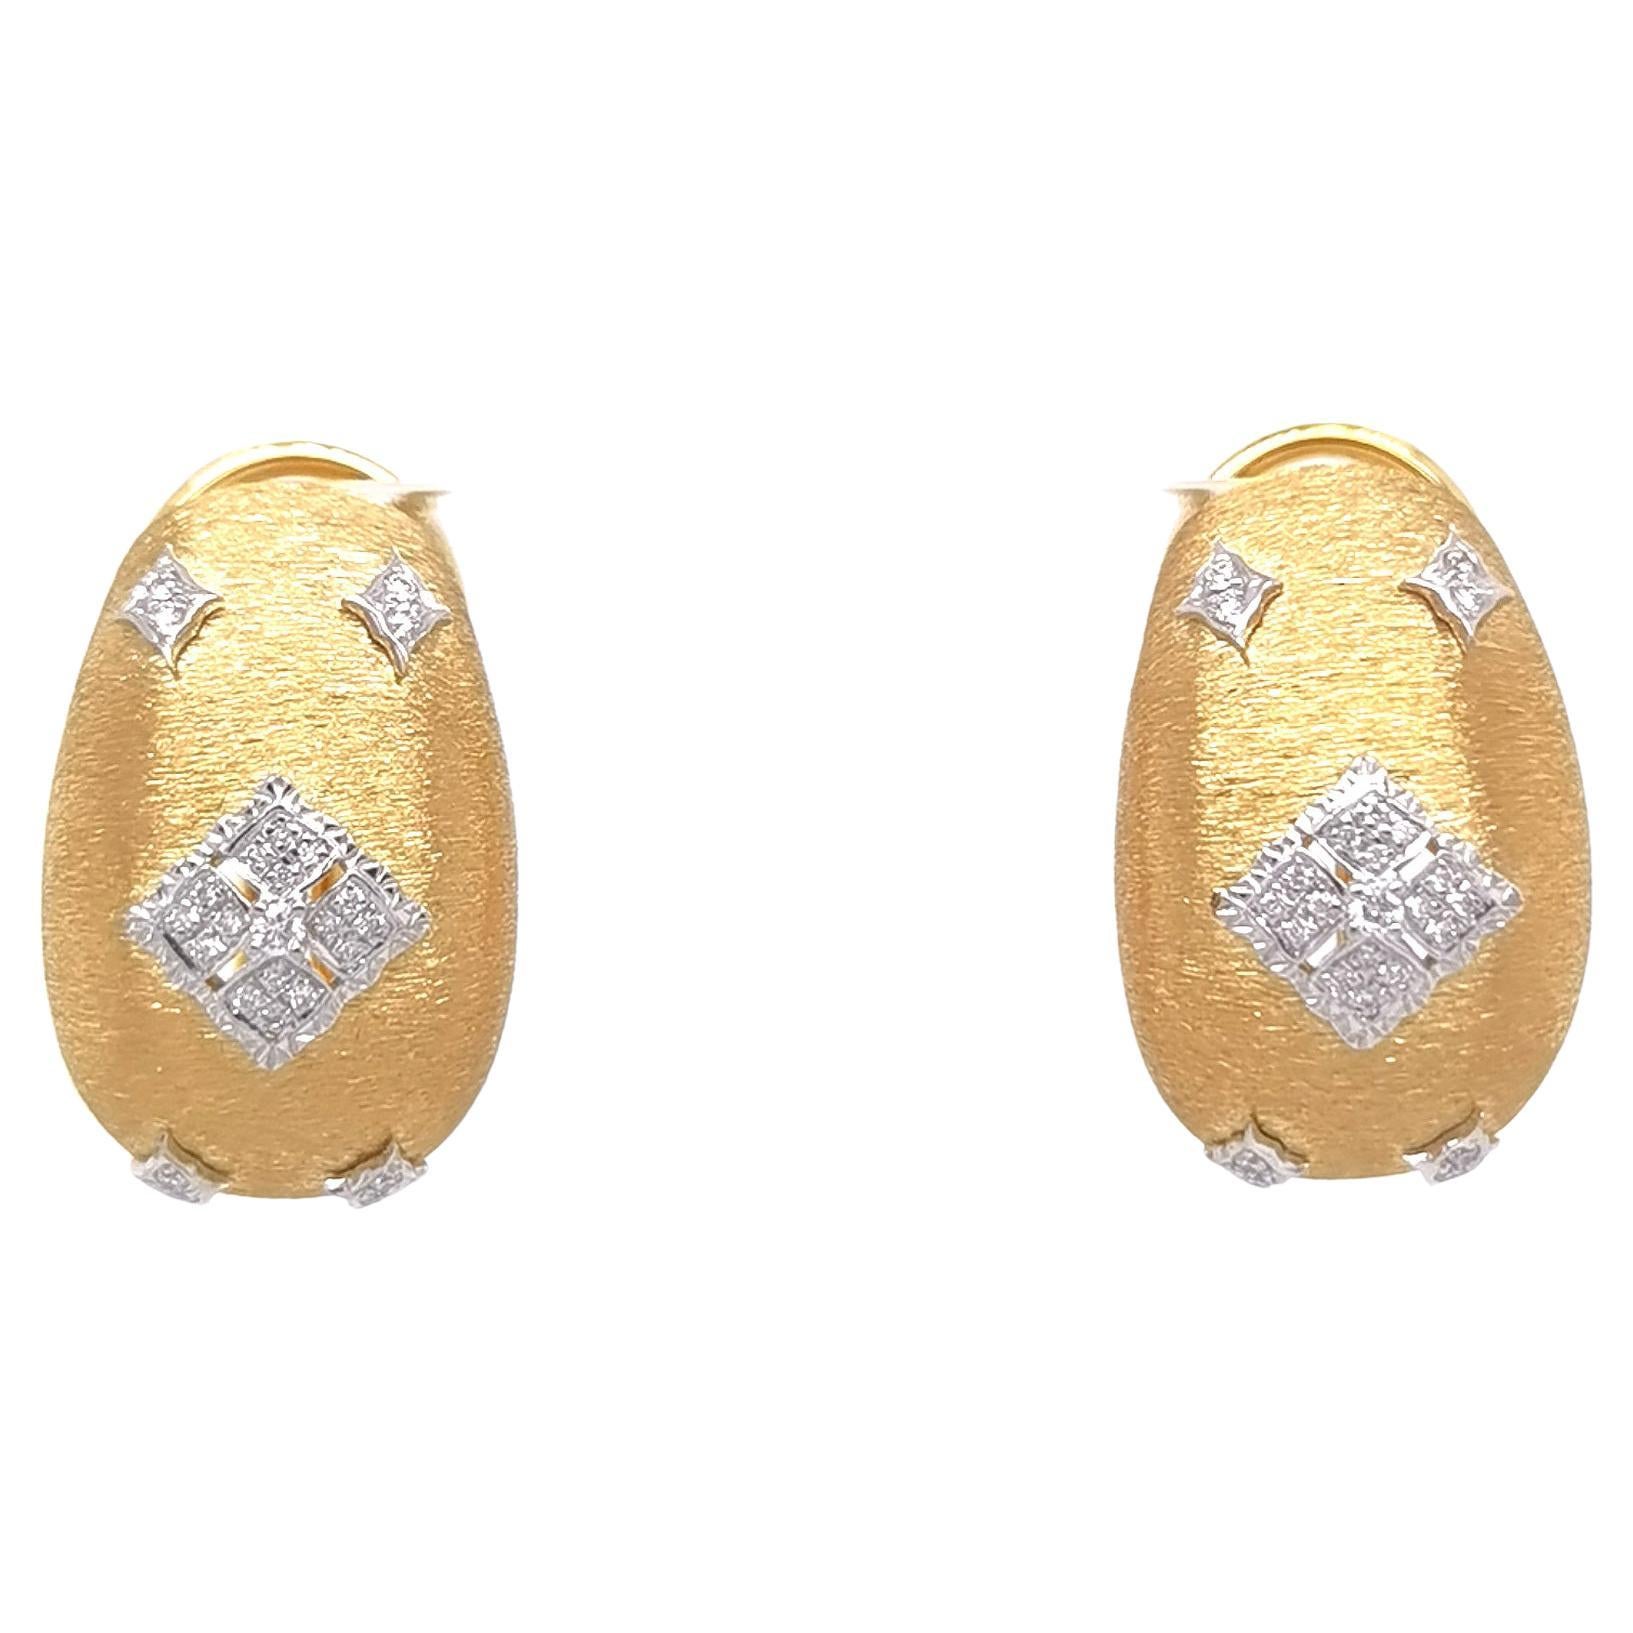 18K Yellow & White Gold Diamond Openwork Earrings in Florentine Finish